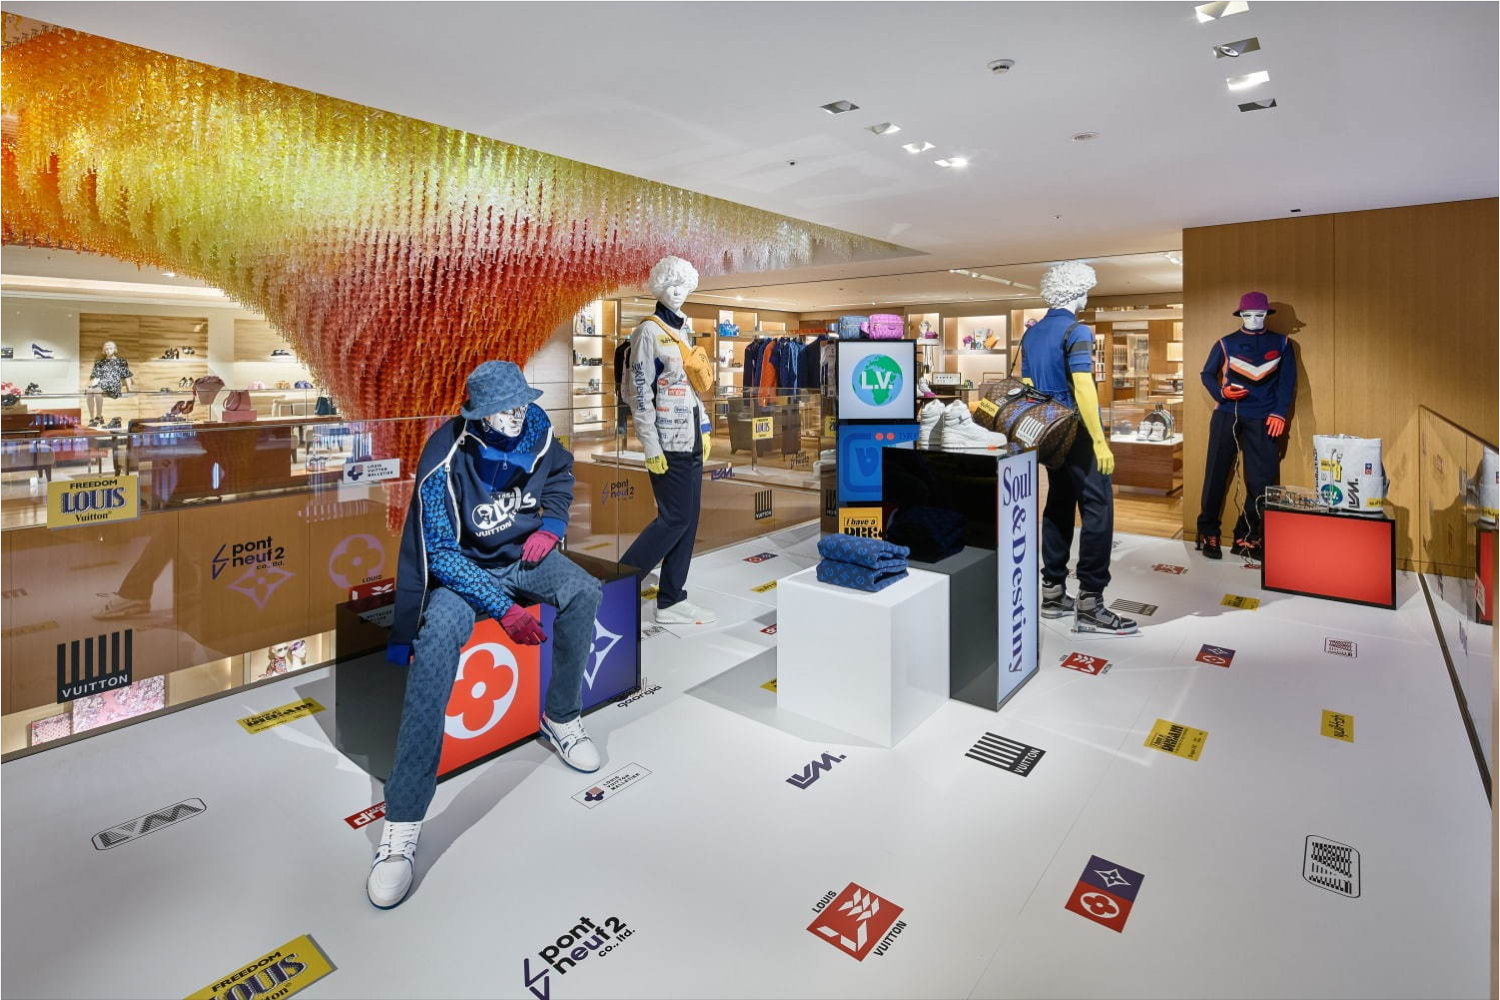 Tokyo: Louis Vuitton Store Renewal – WindowsWear